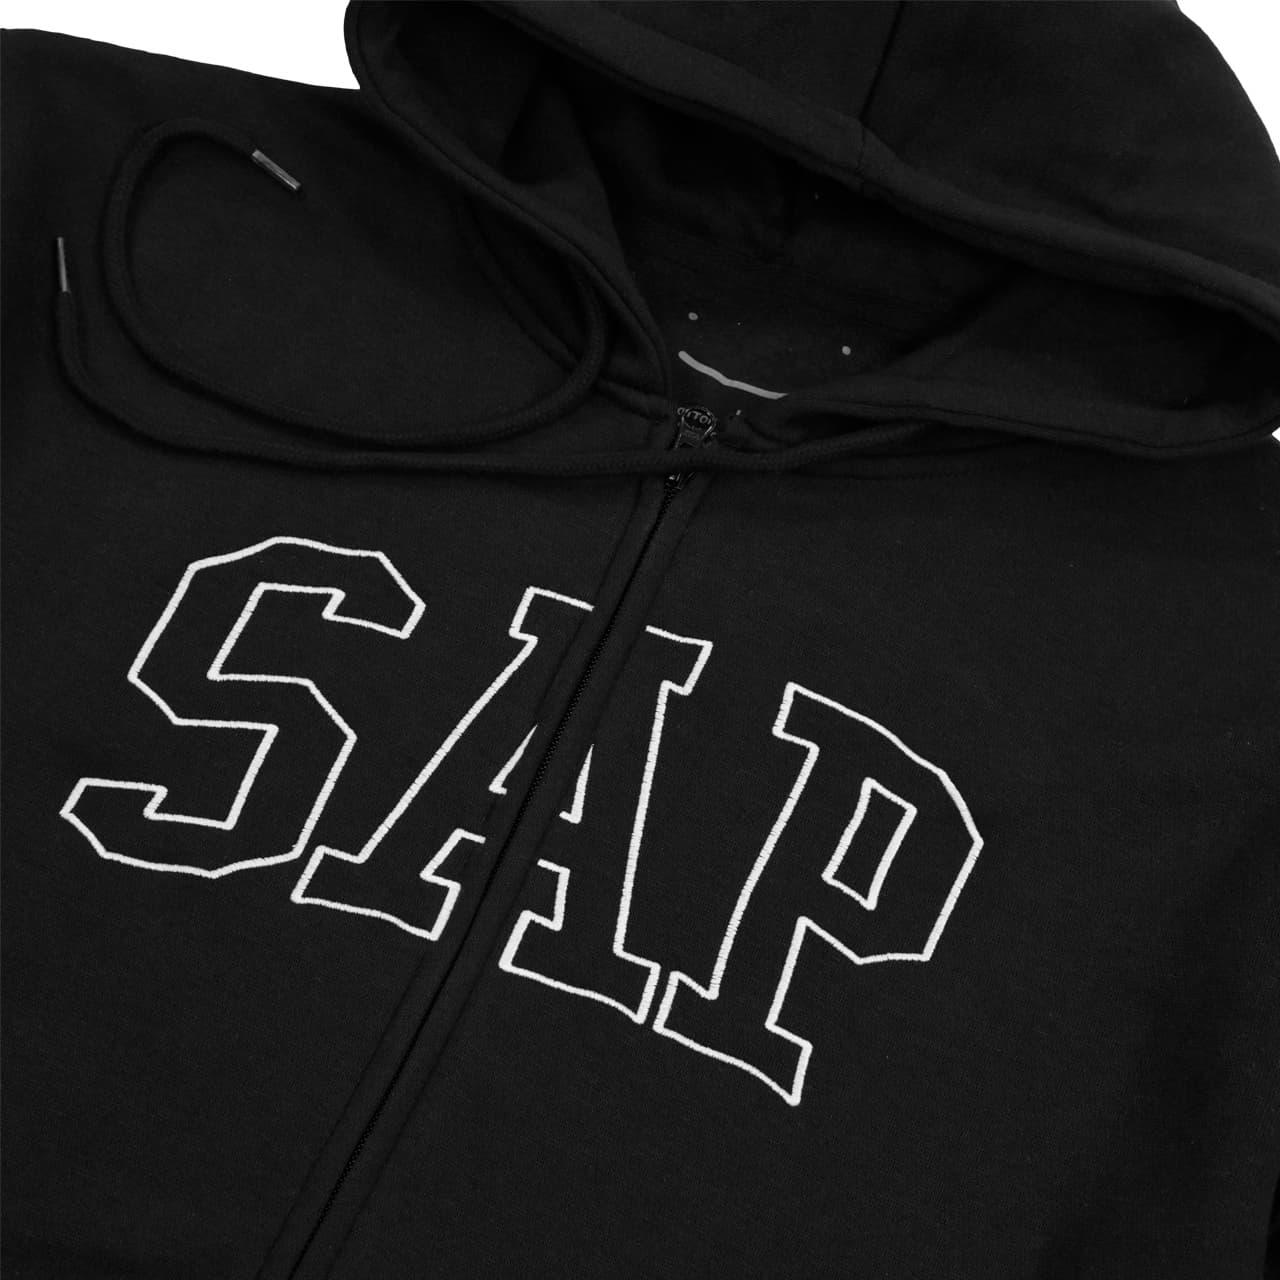 Sapnap SAP Embroidered Full-Zip Hoodie